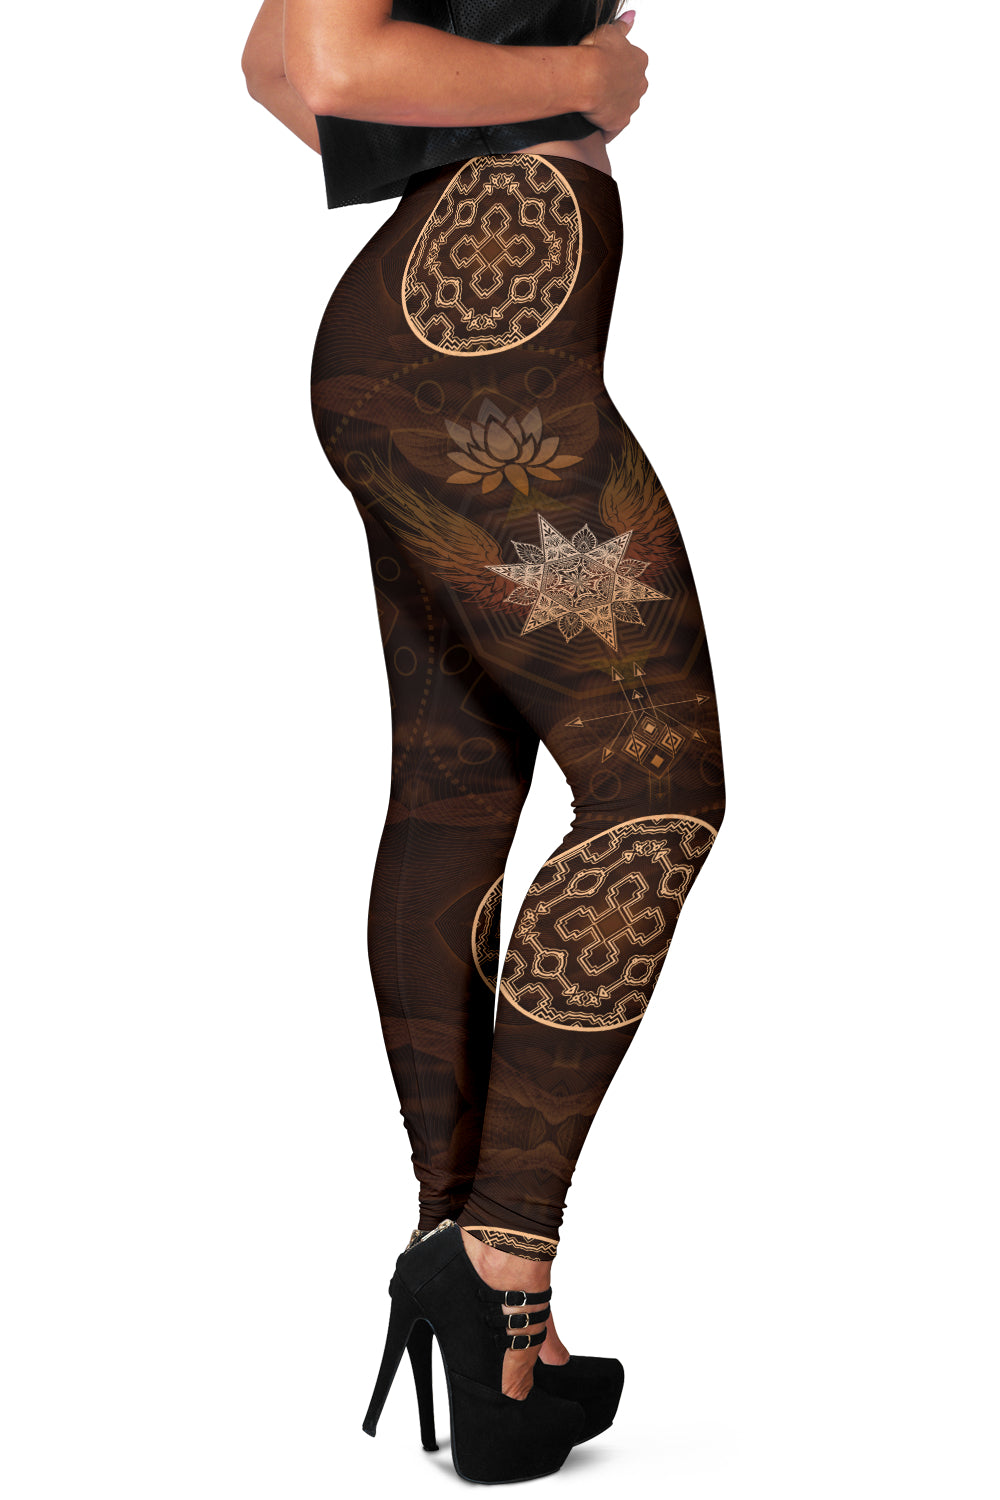 Shipibo | Womens Leggings by Cosmic Shiva